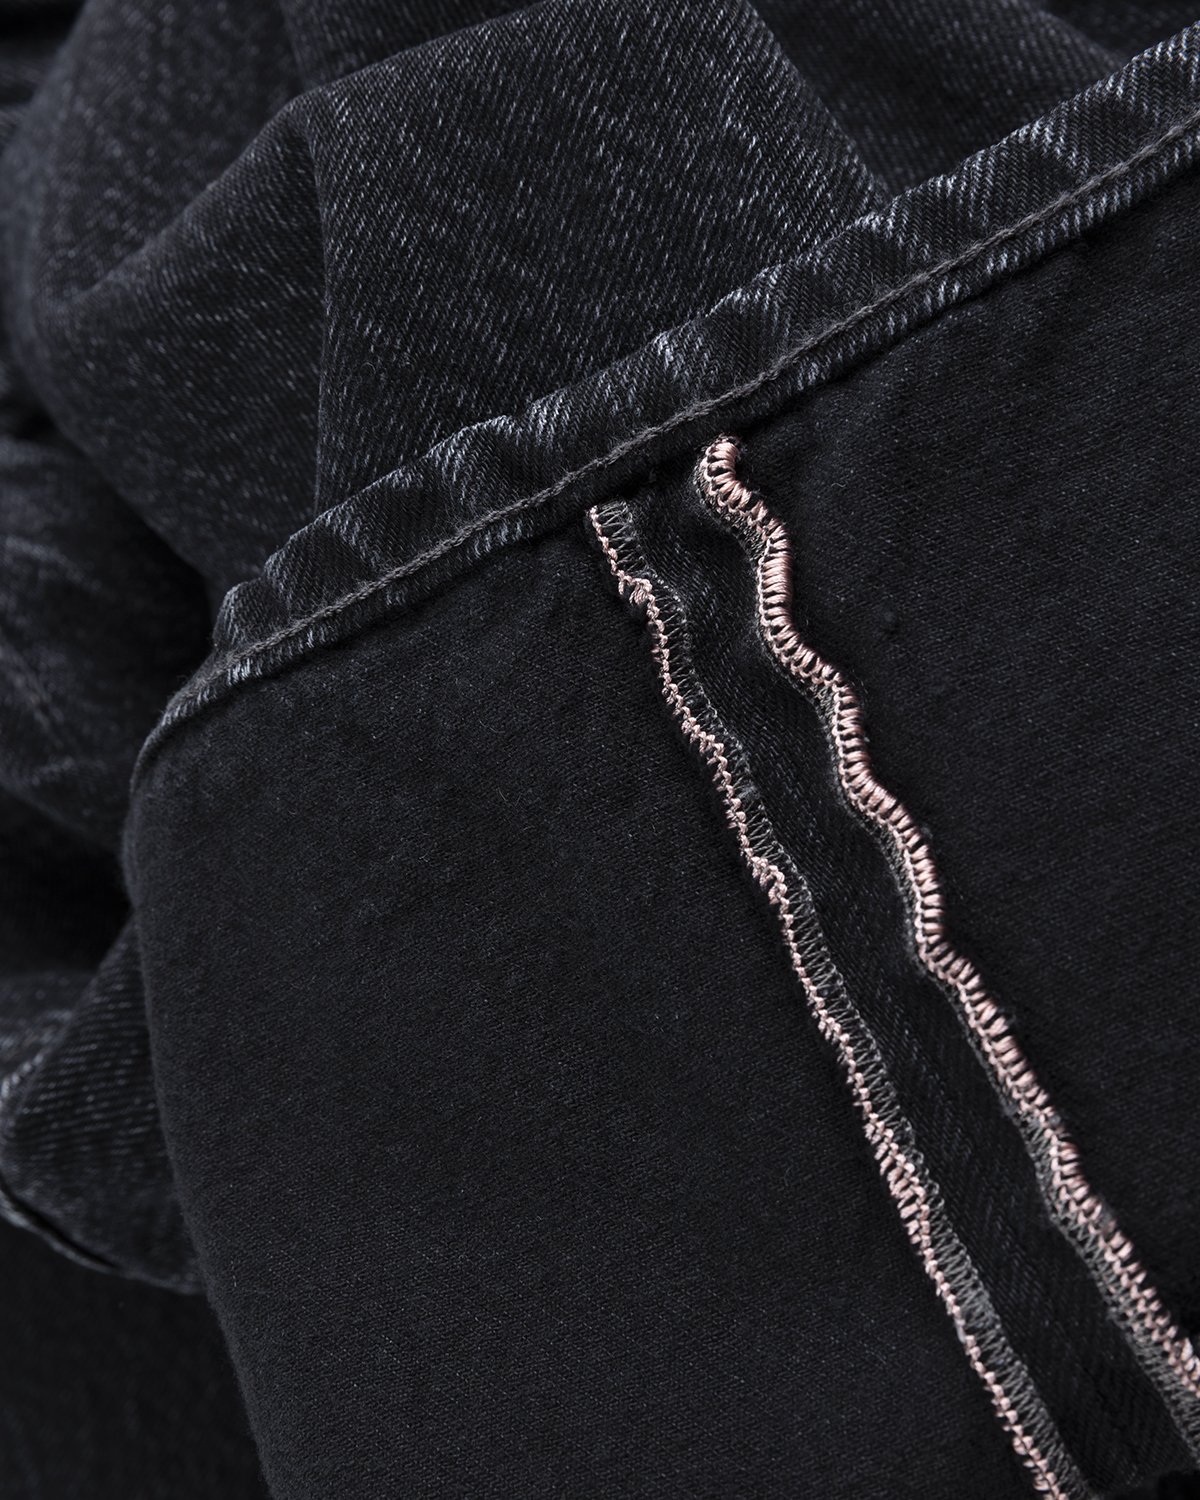 Acne Studios - Brutus 2021M Boot Cut Jeans Black - Clothing - Black - Image 6